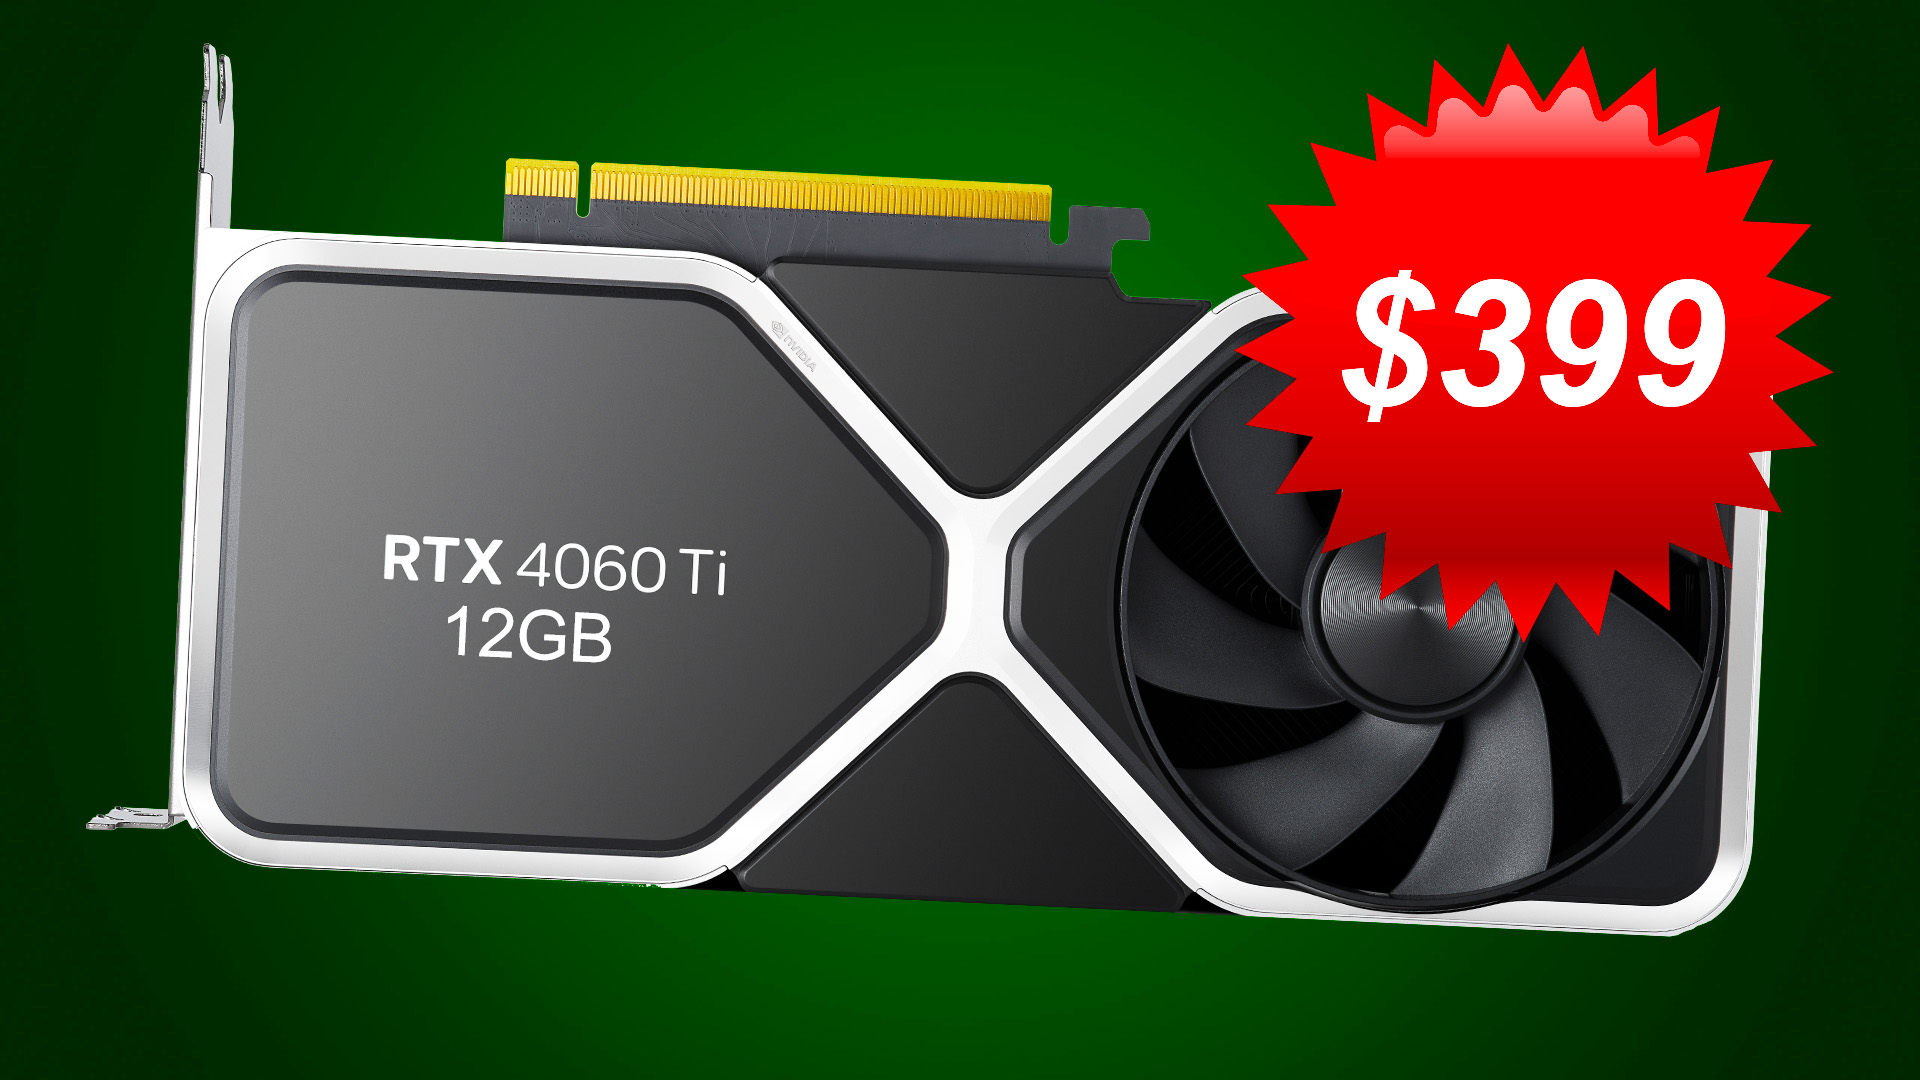 Imagine if the Nvidia GeForce RTX 4000 range wasn't a joke: RTX 4060 Ti with $399 price tag